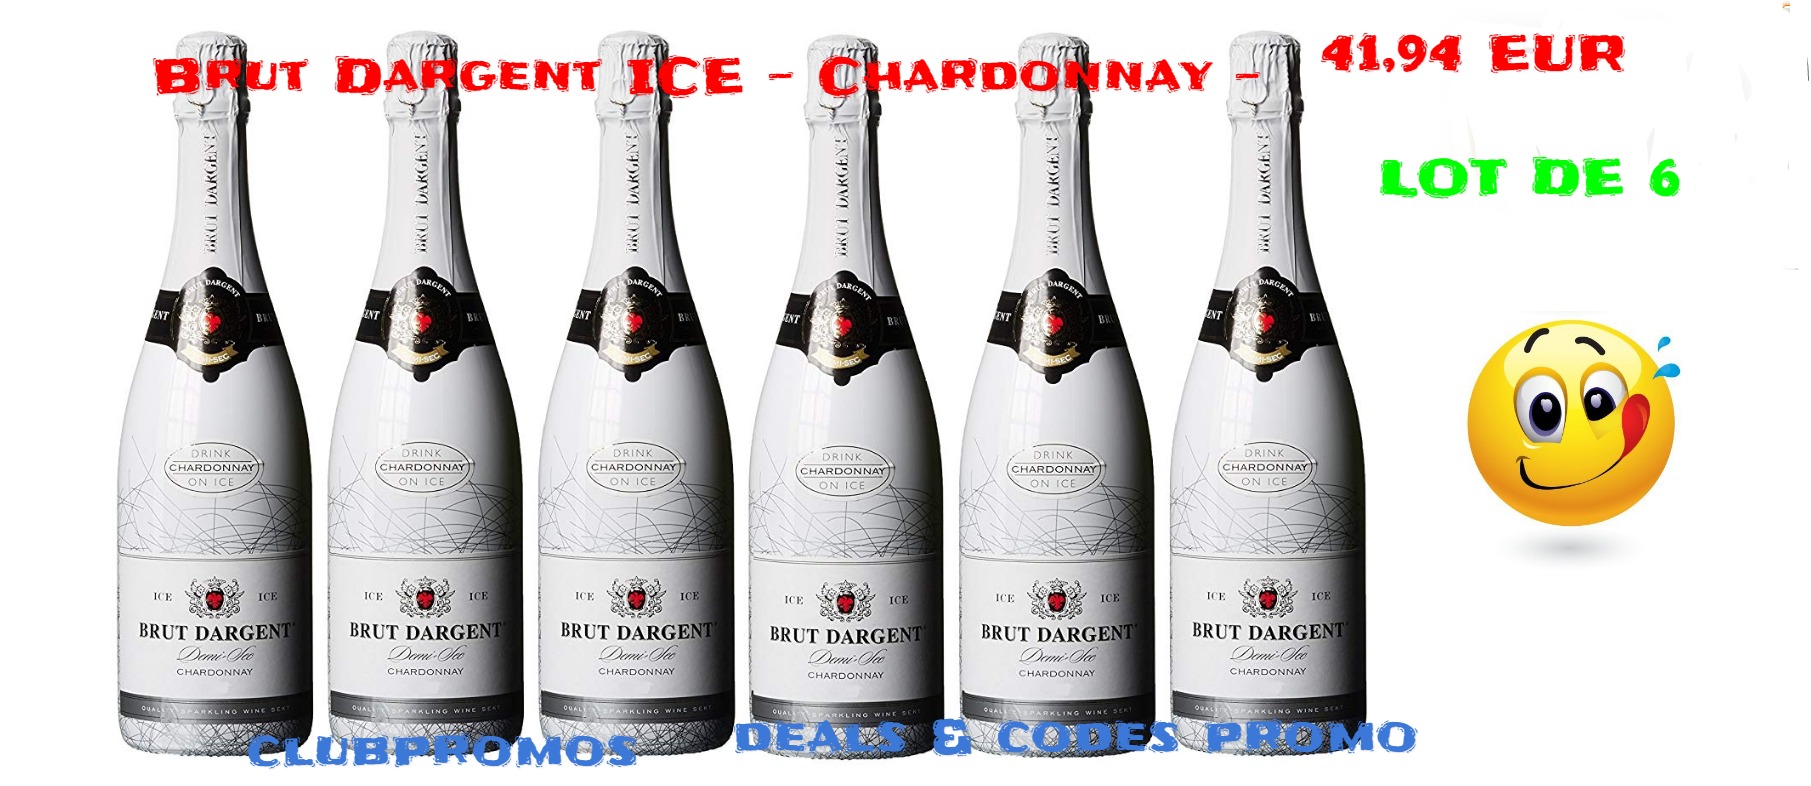 Brut Dargent ICE - Chardonnay - amazon.jpg